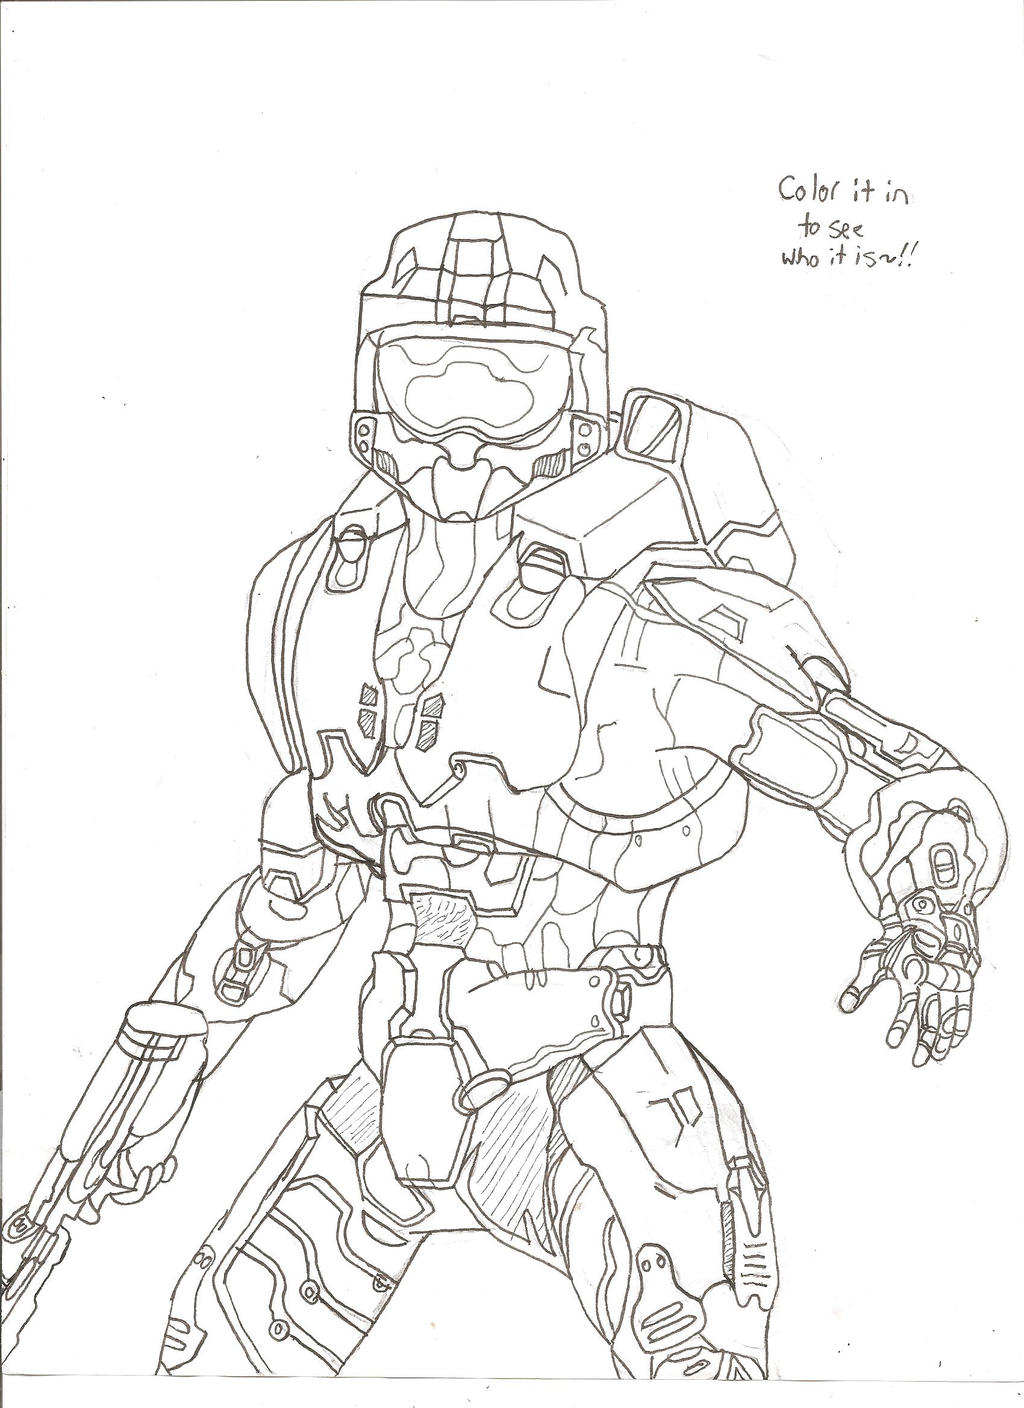 Halo- Master Chief (Color Him In!) by UnsunkenHedgehog101 on DeviantArt